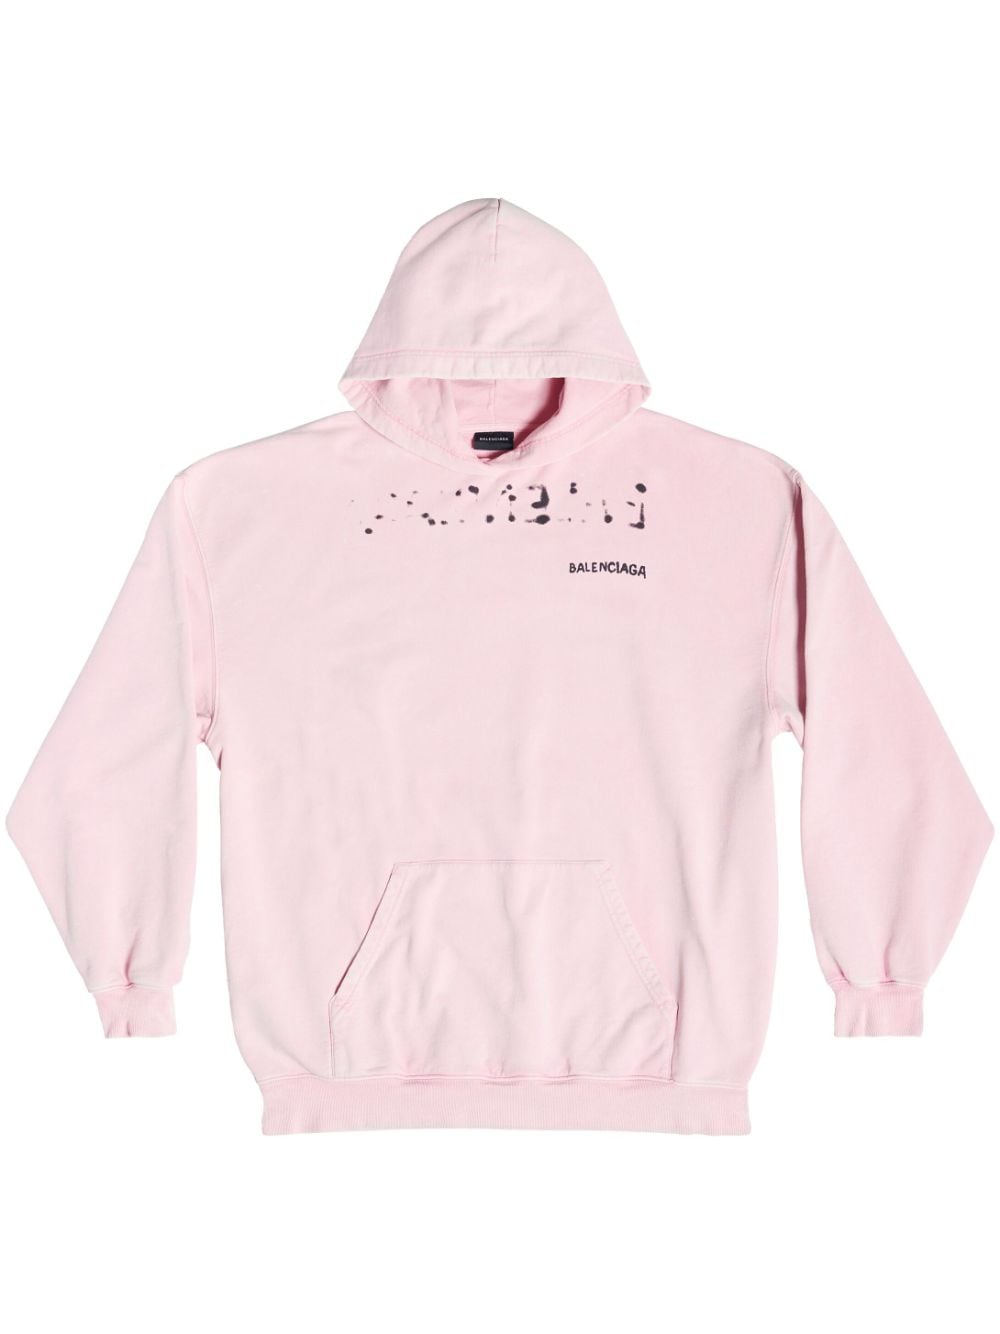 Balenciaga hand drawn-logo cotton hoodie - Pink von Balenciaga